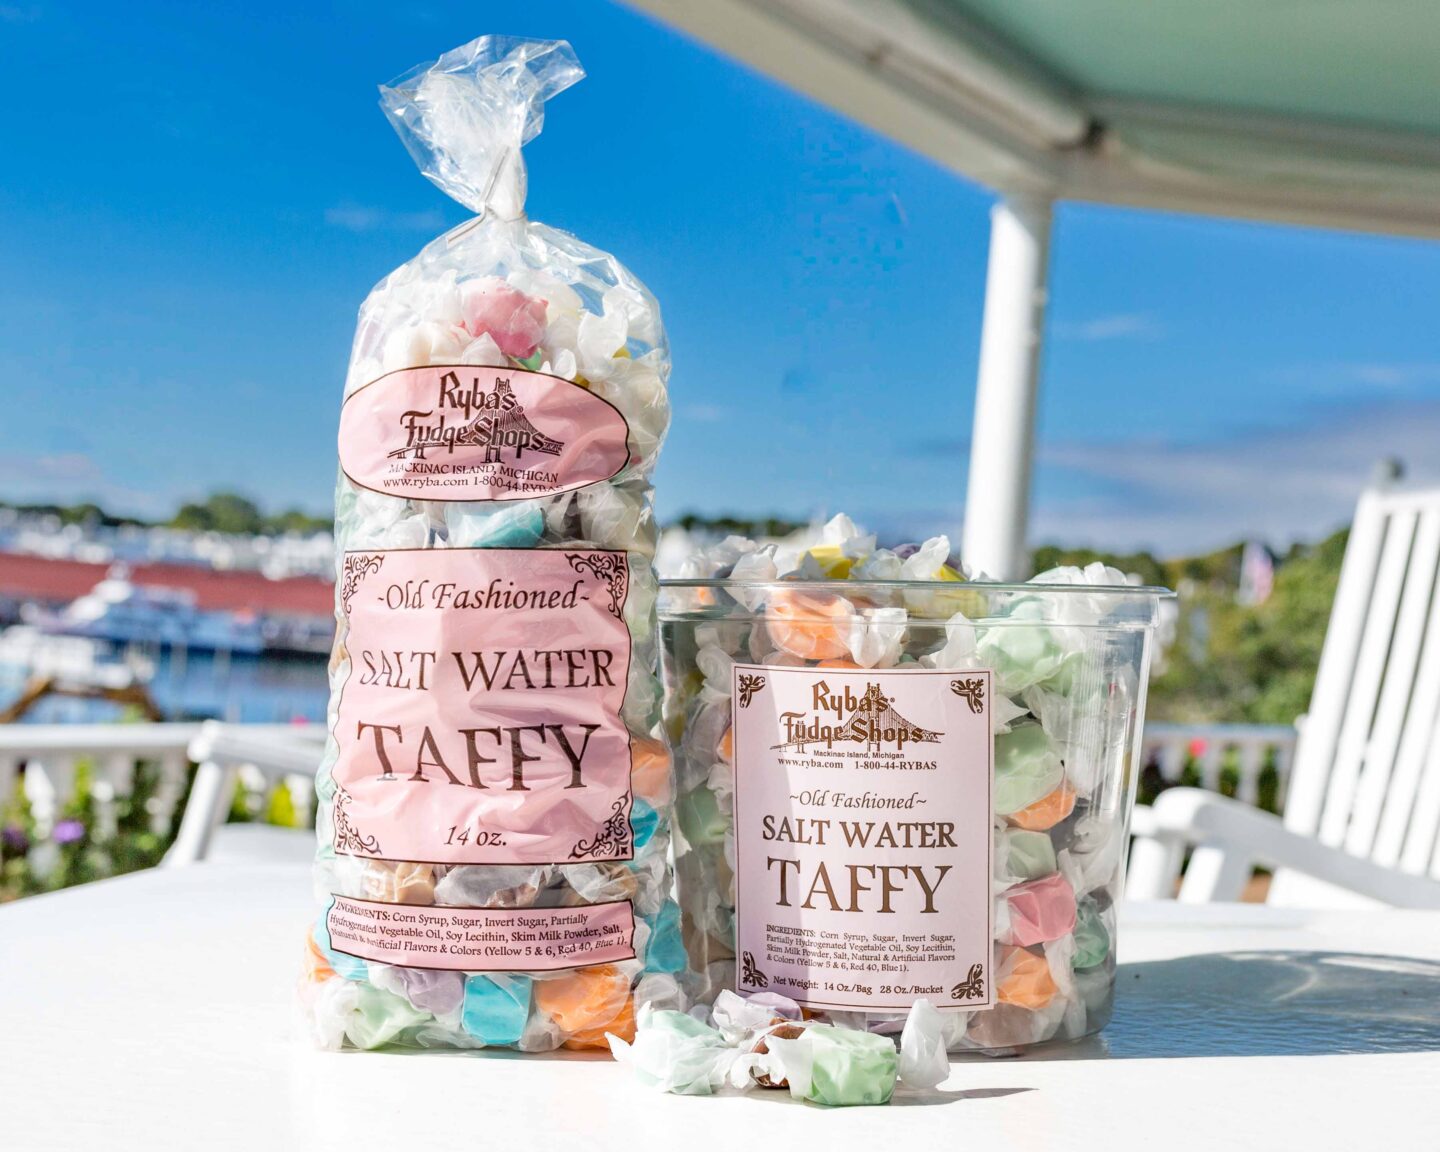 Salt Water Taffy from Ryba's Fudge Shop on Mackinac Island